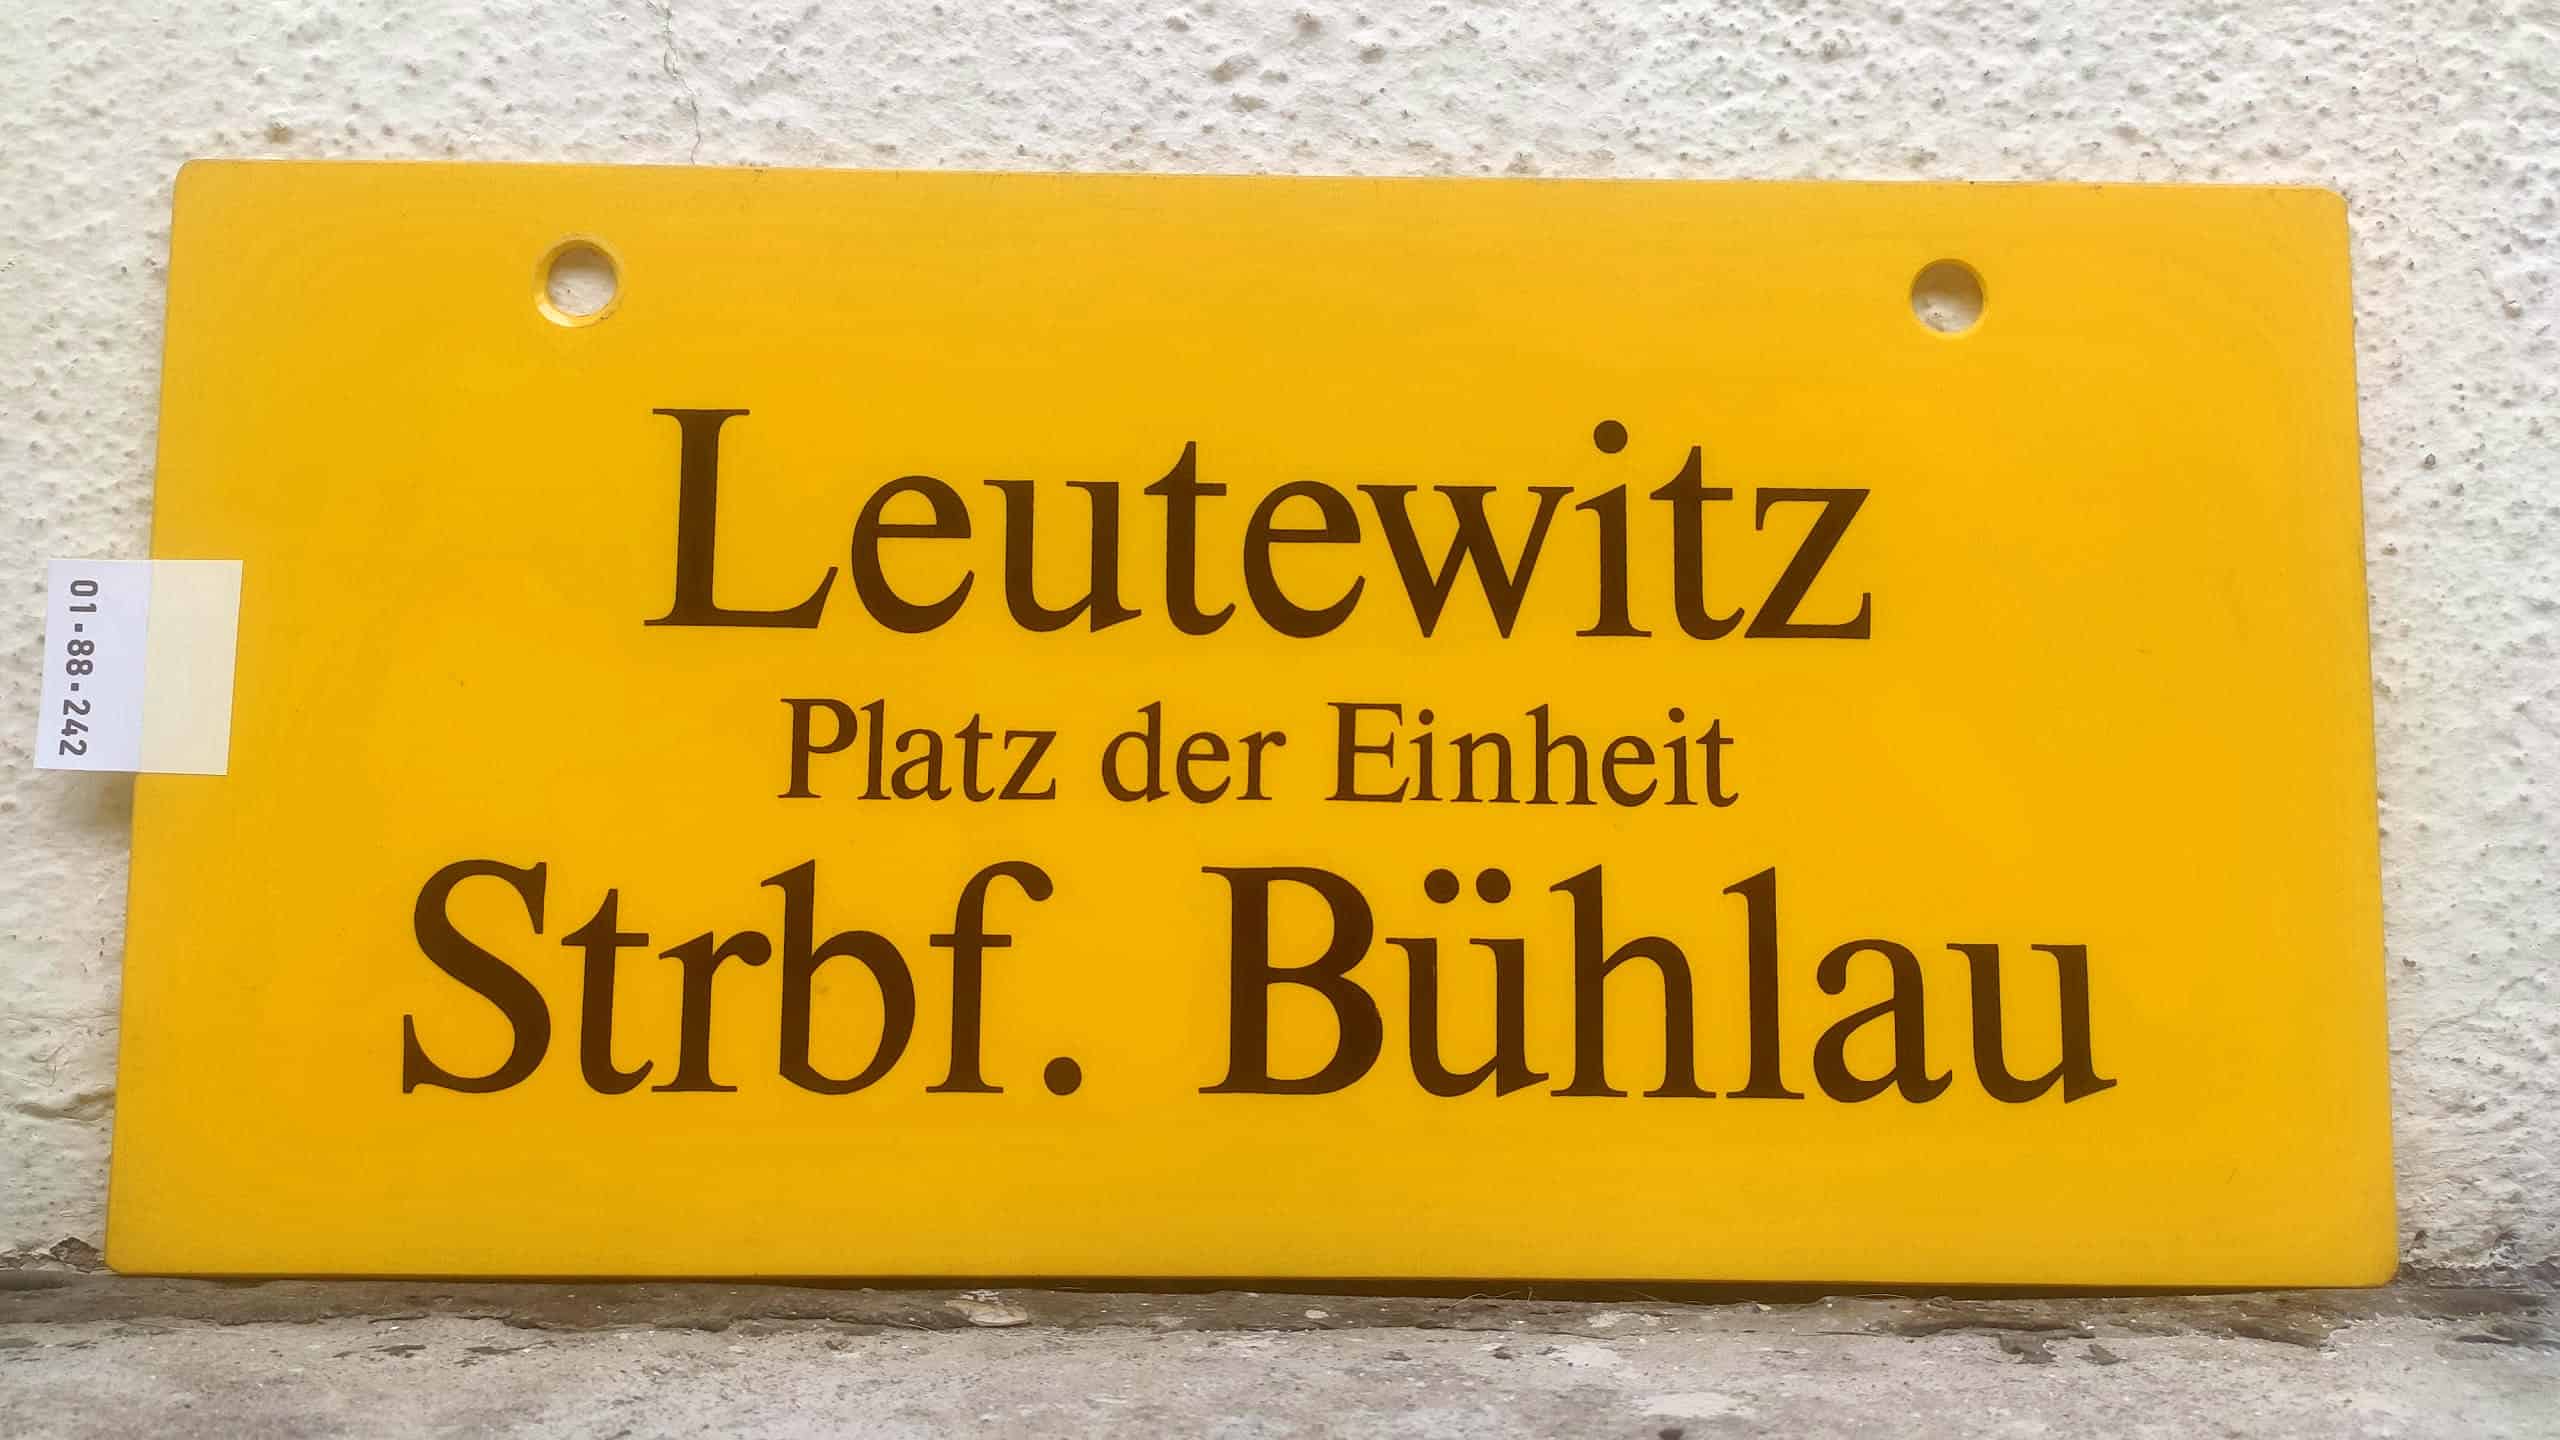 Leutewitz – Strbf. Bühlau